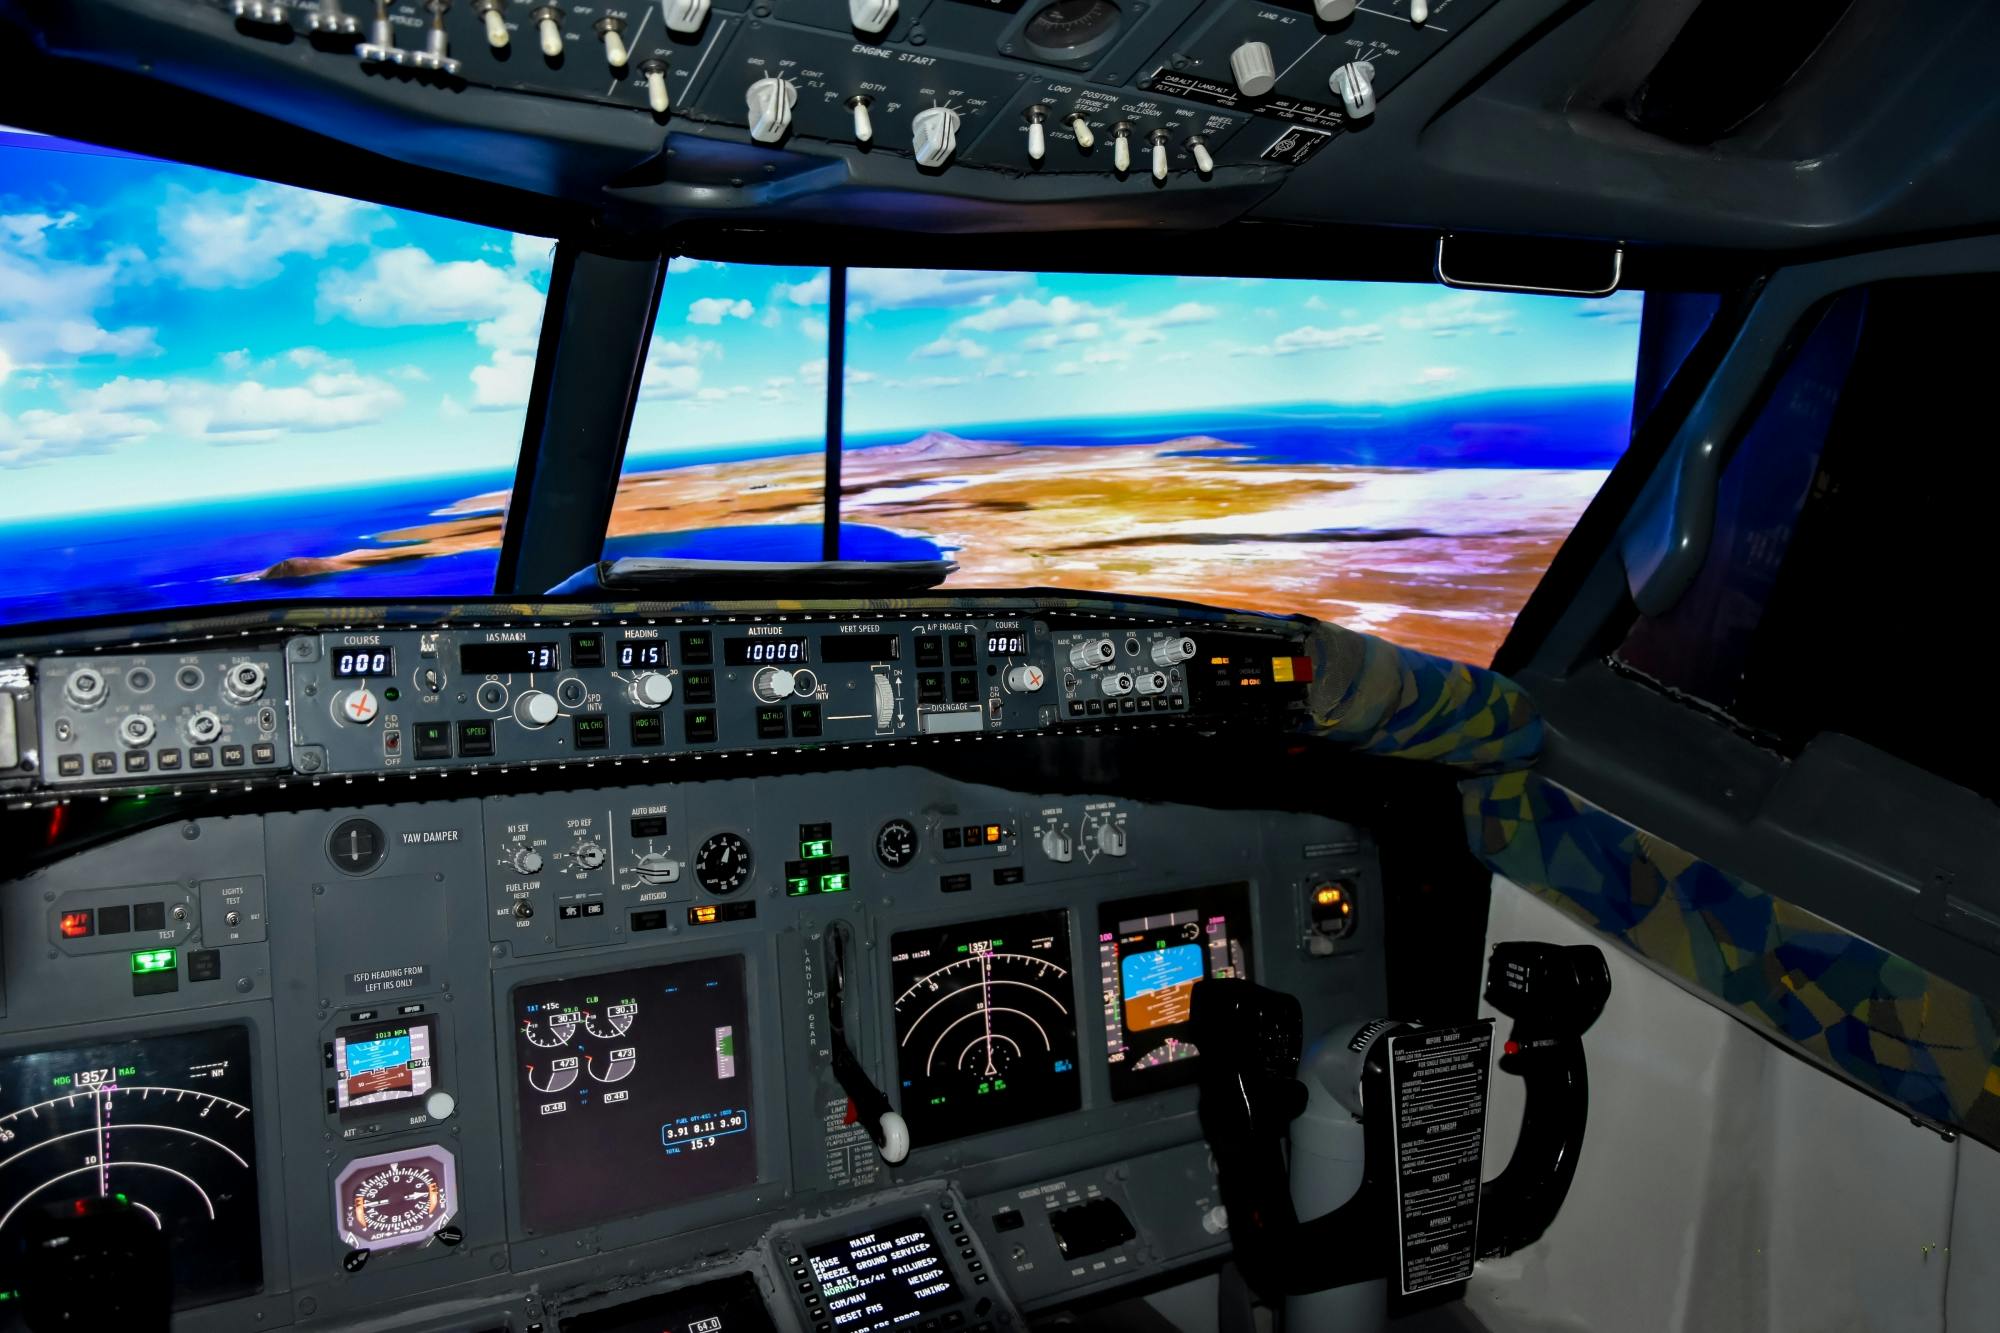 60-minute flight simulation experience in Cape Verde